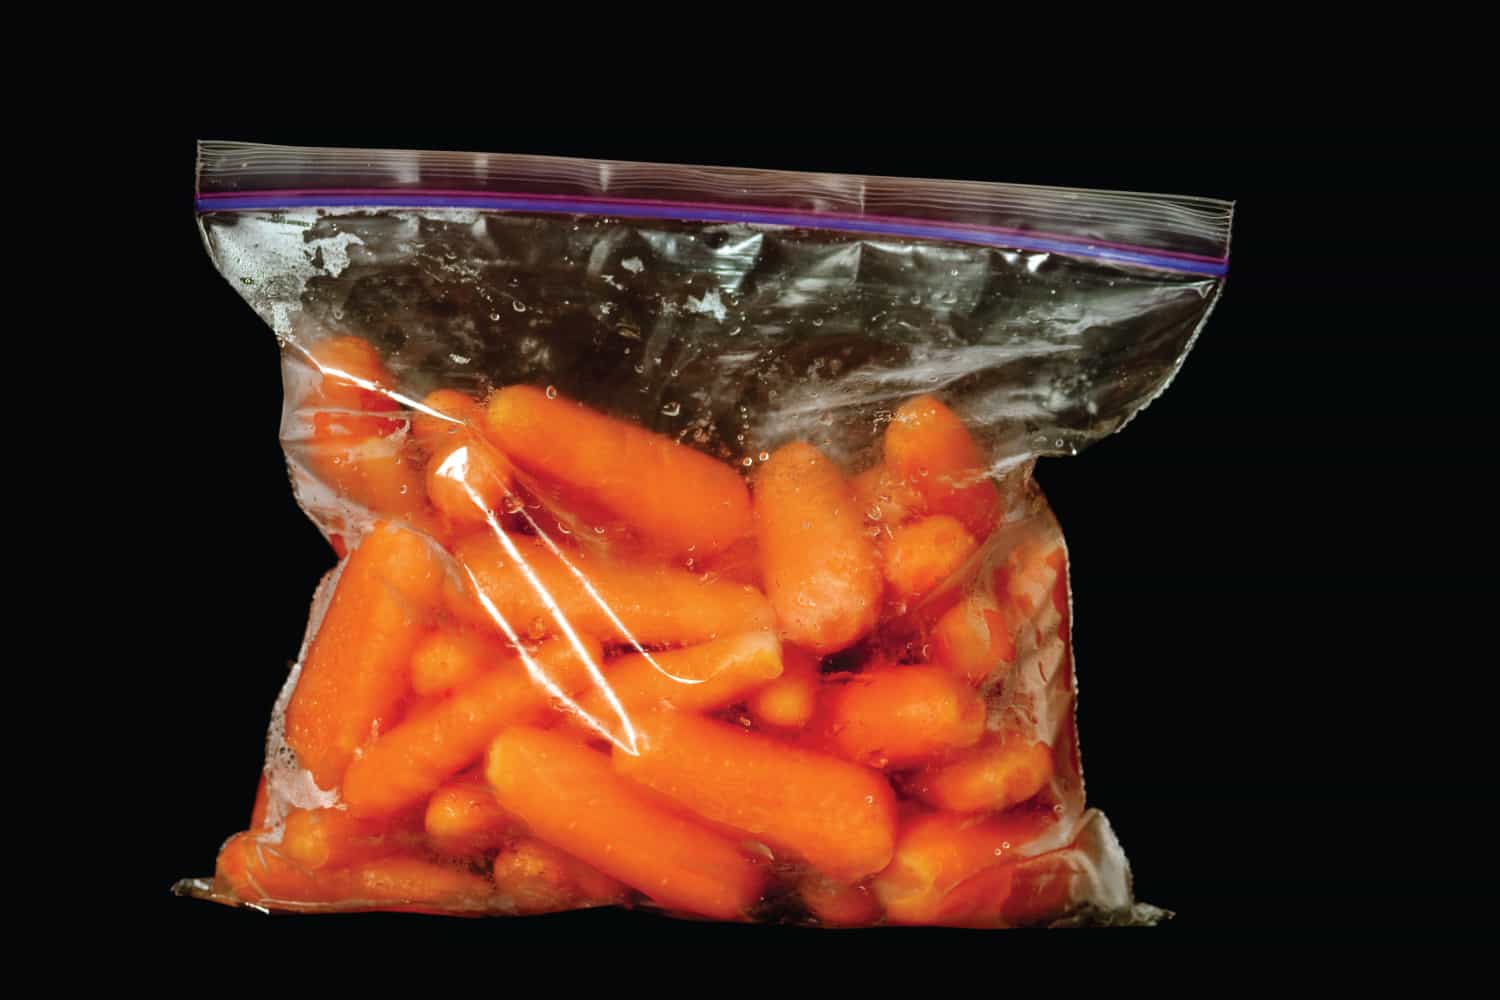 A ziplock bag full of baby carrots